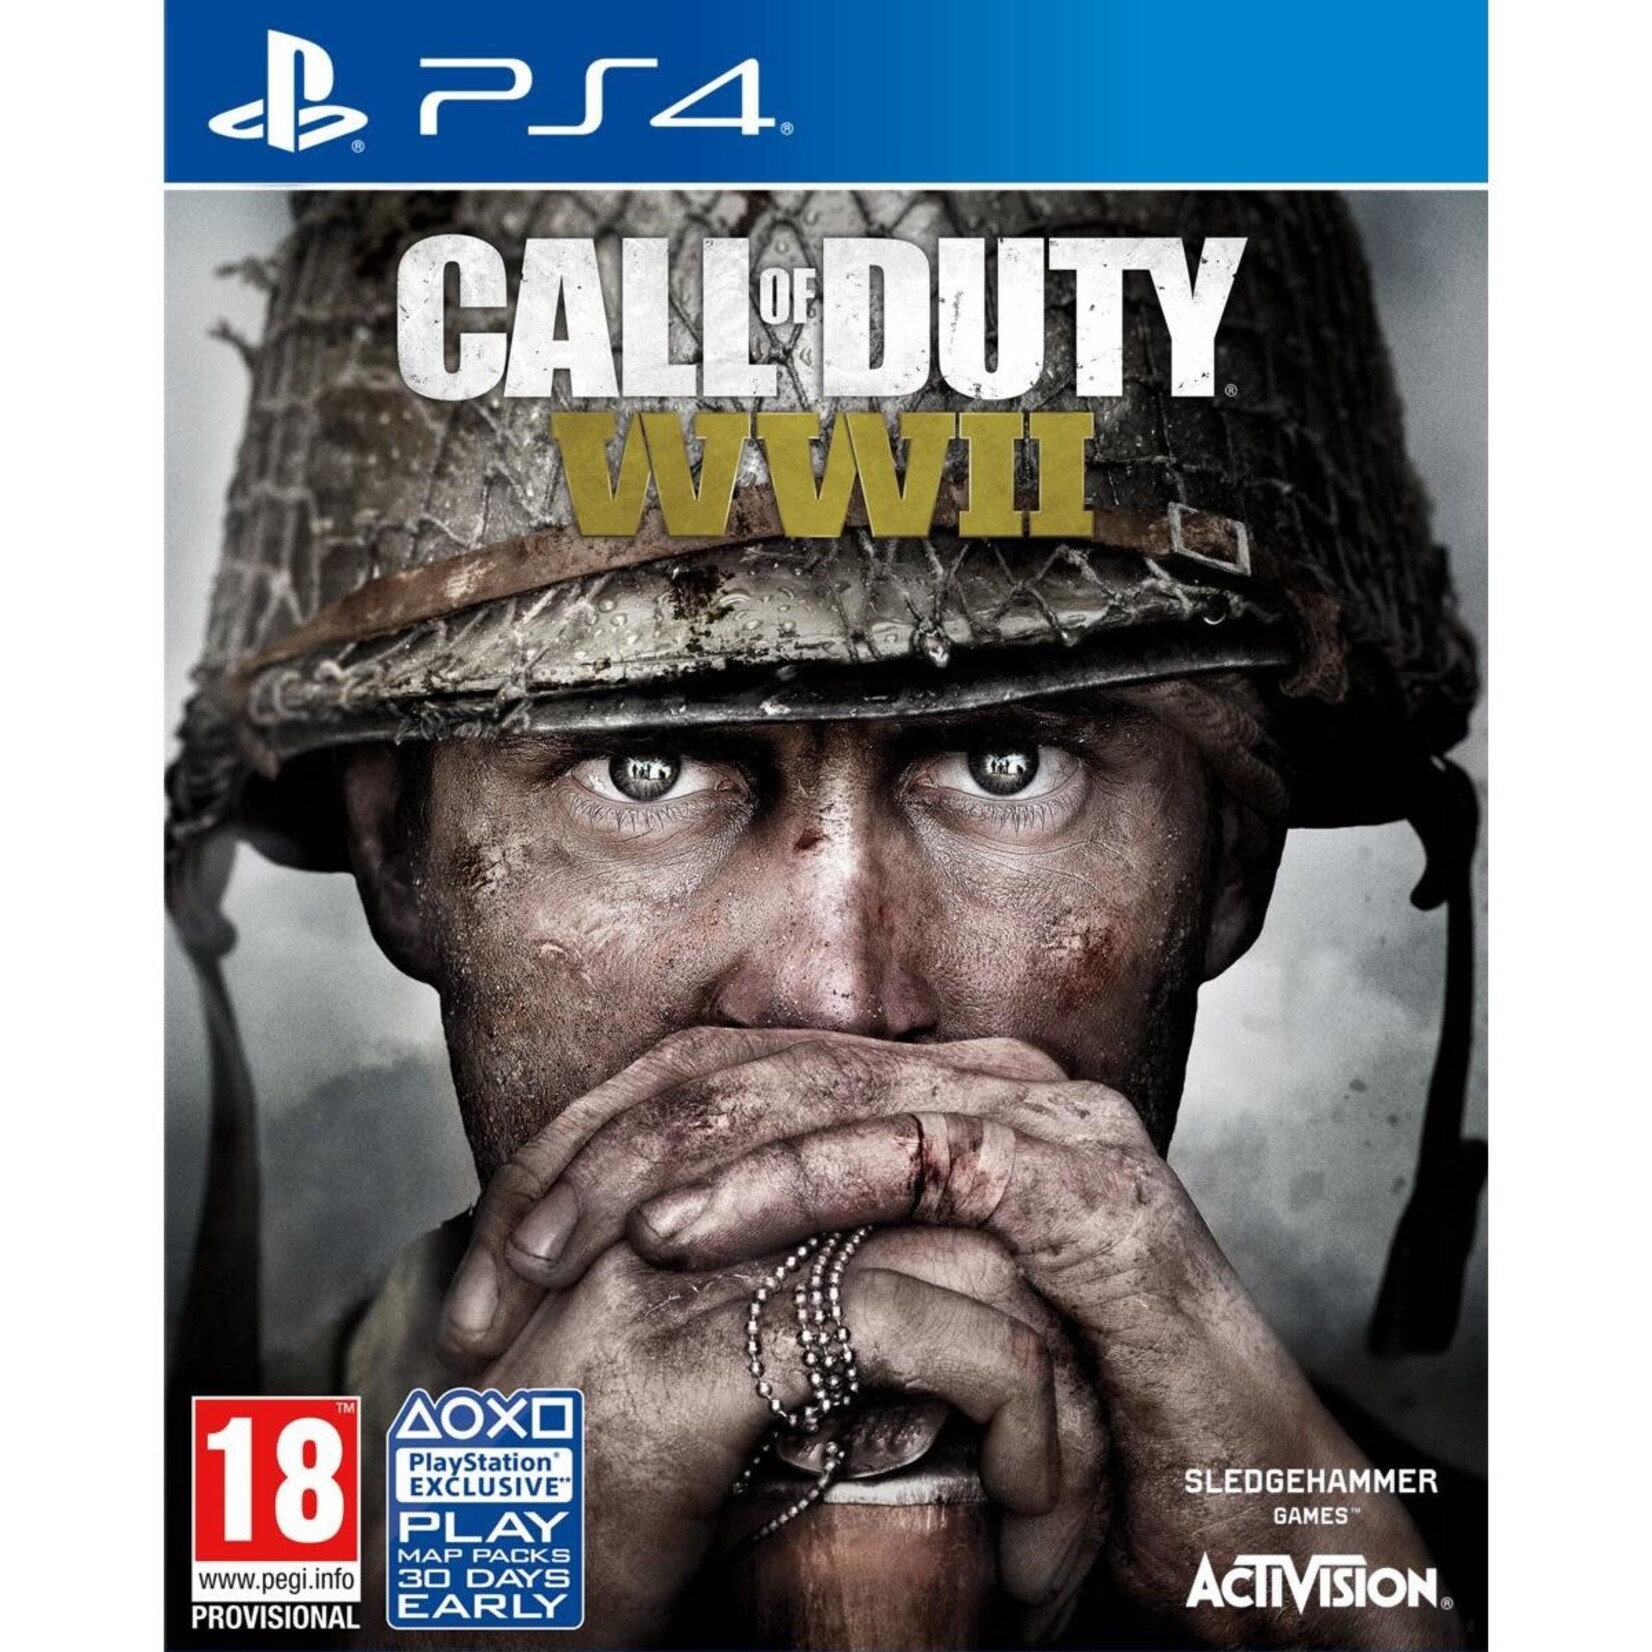 PS4 PS4 CALL OF DUTY: WORLD WAR 2